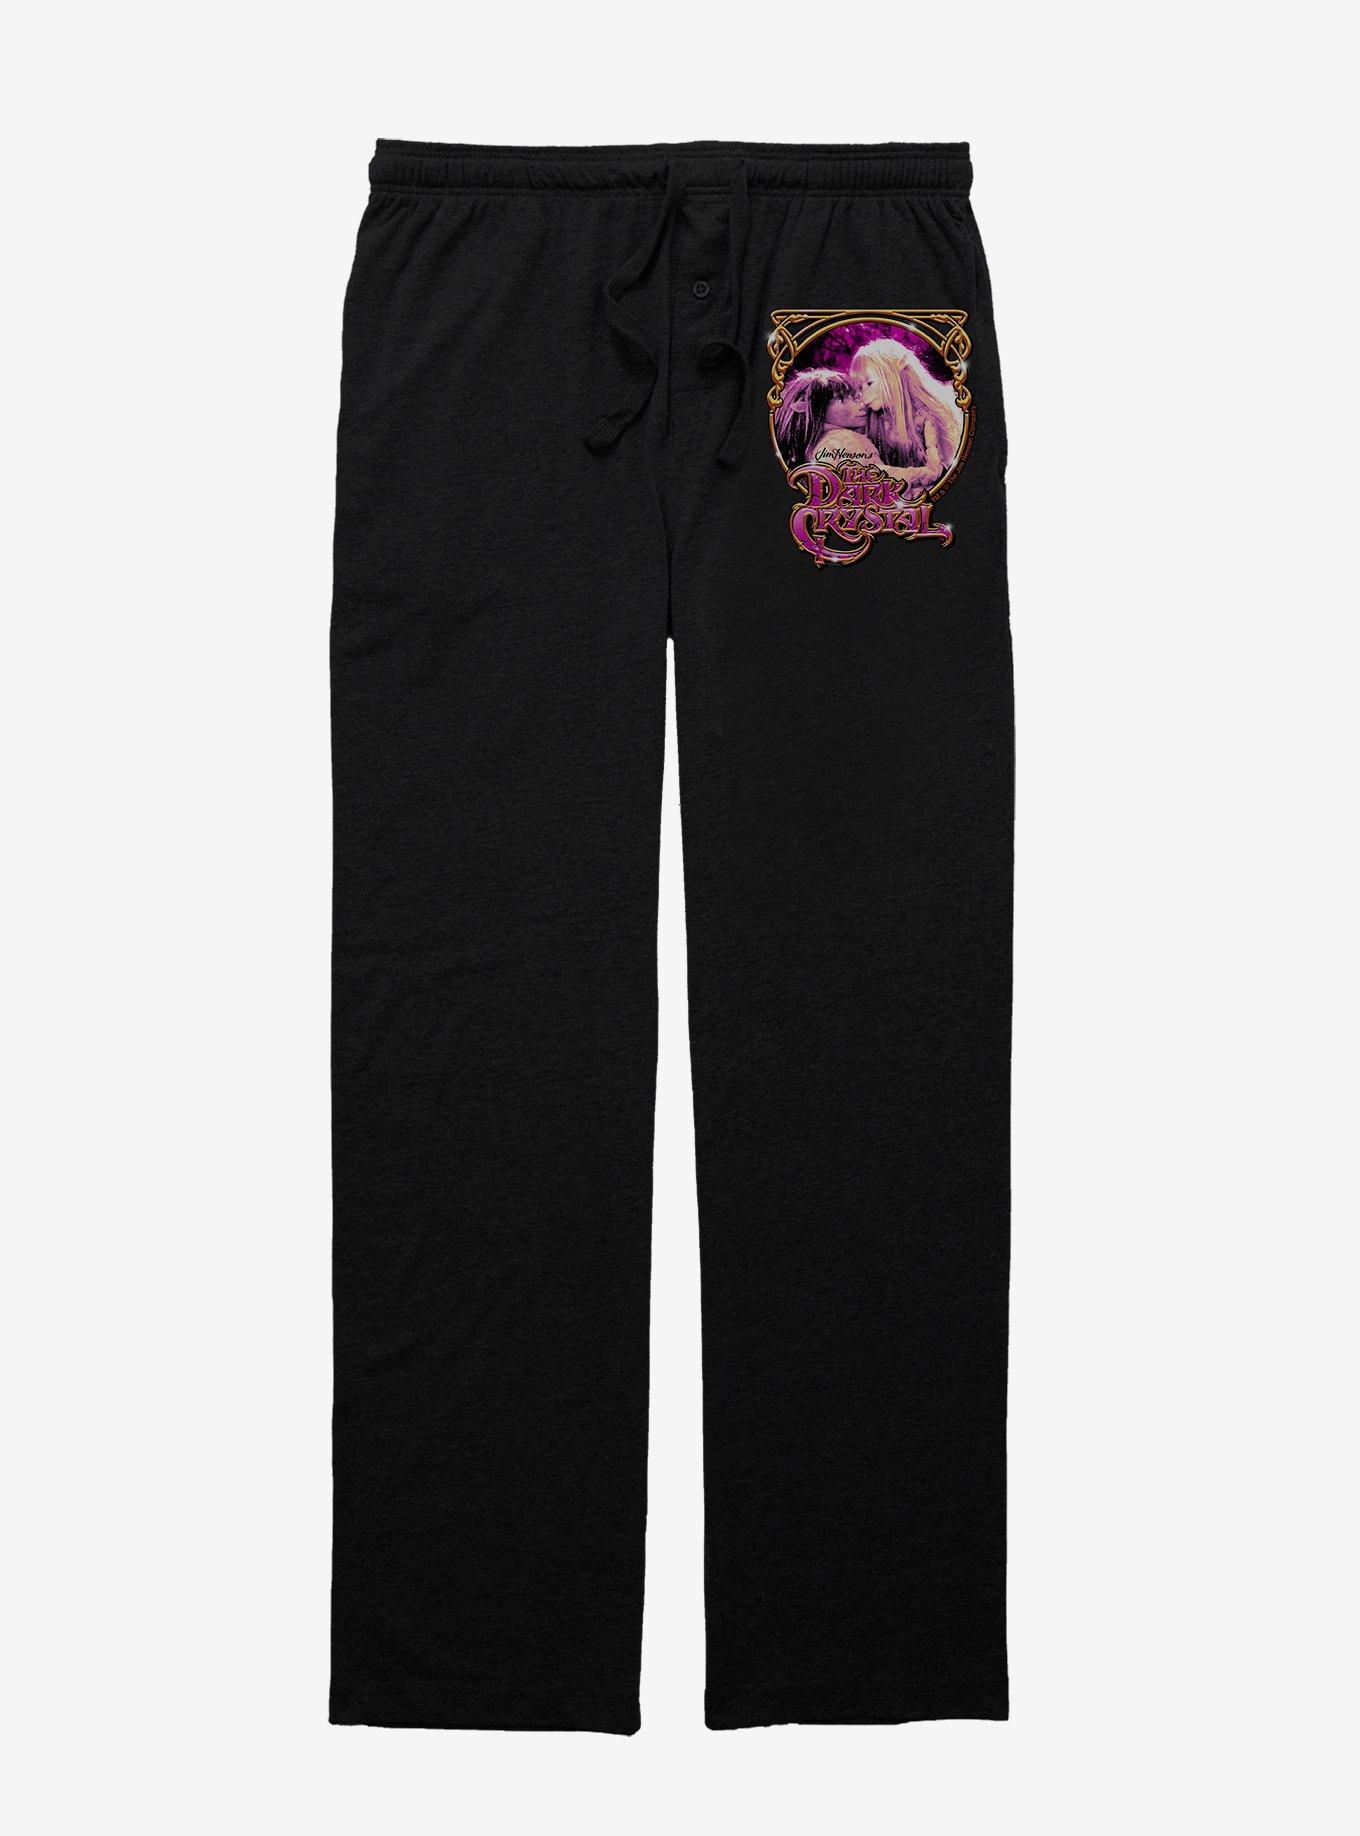 Jim Henson's The Dark Crystal Embrace Pajama Pants